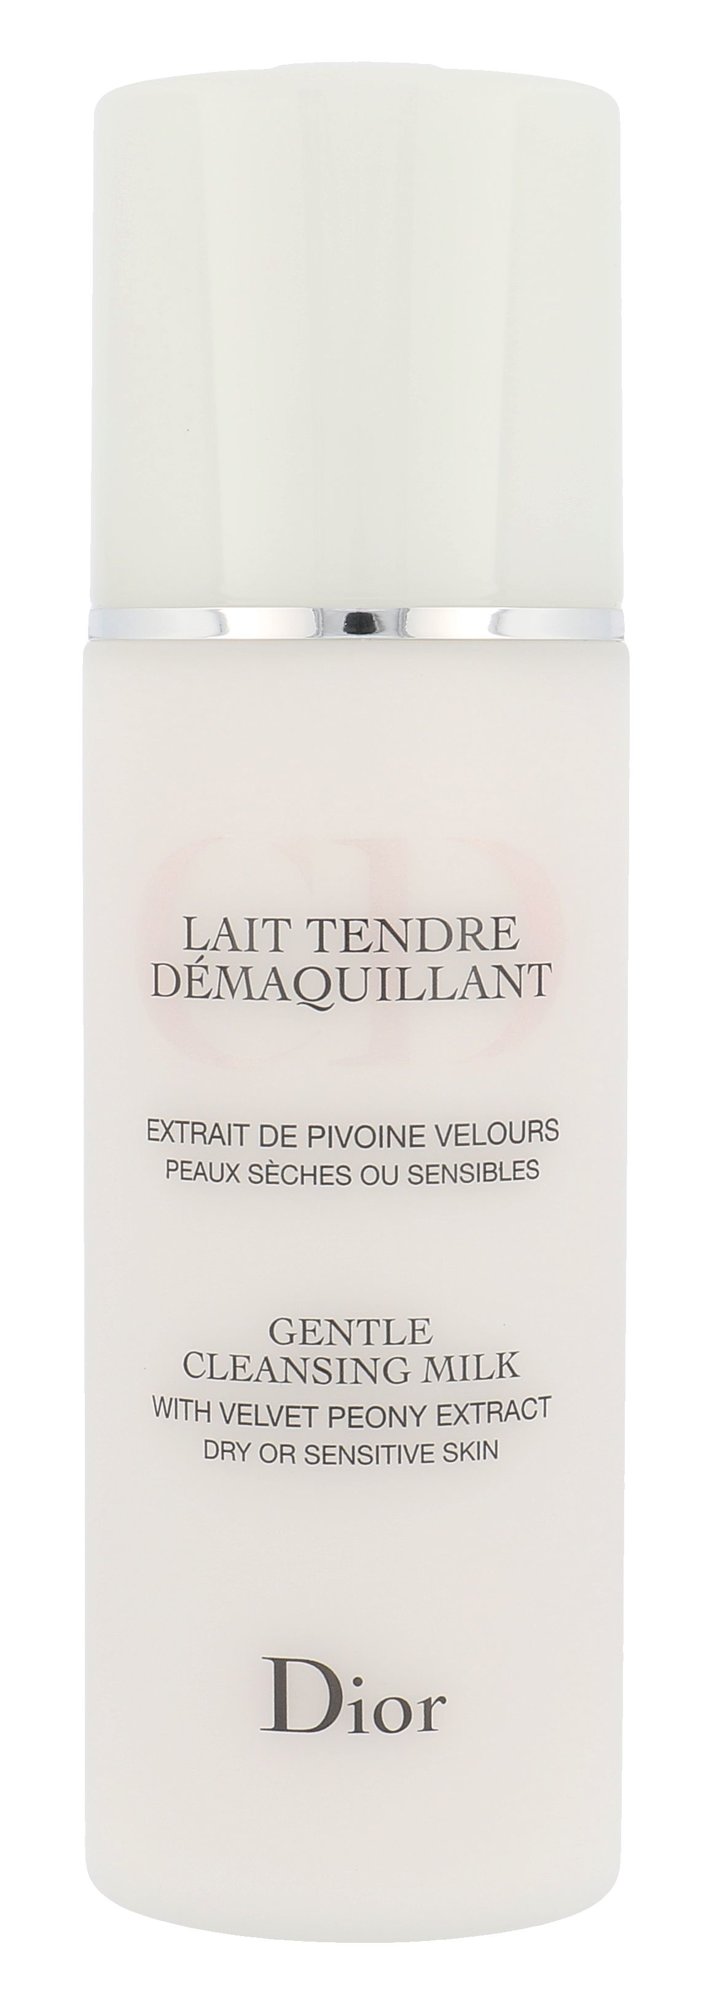 Christian Dior Gentle Cleansing Milk veido pienelis 